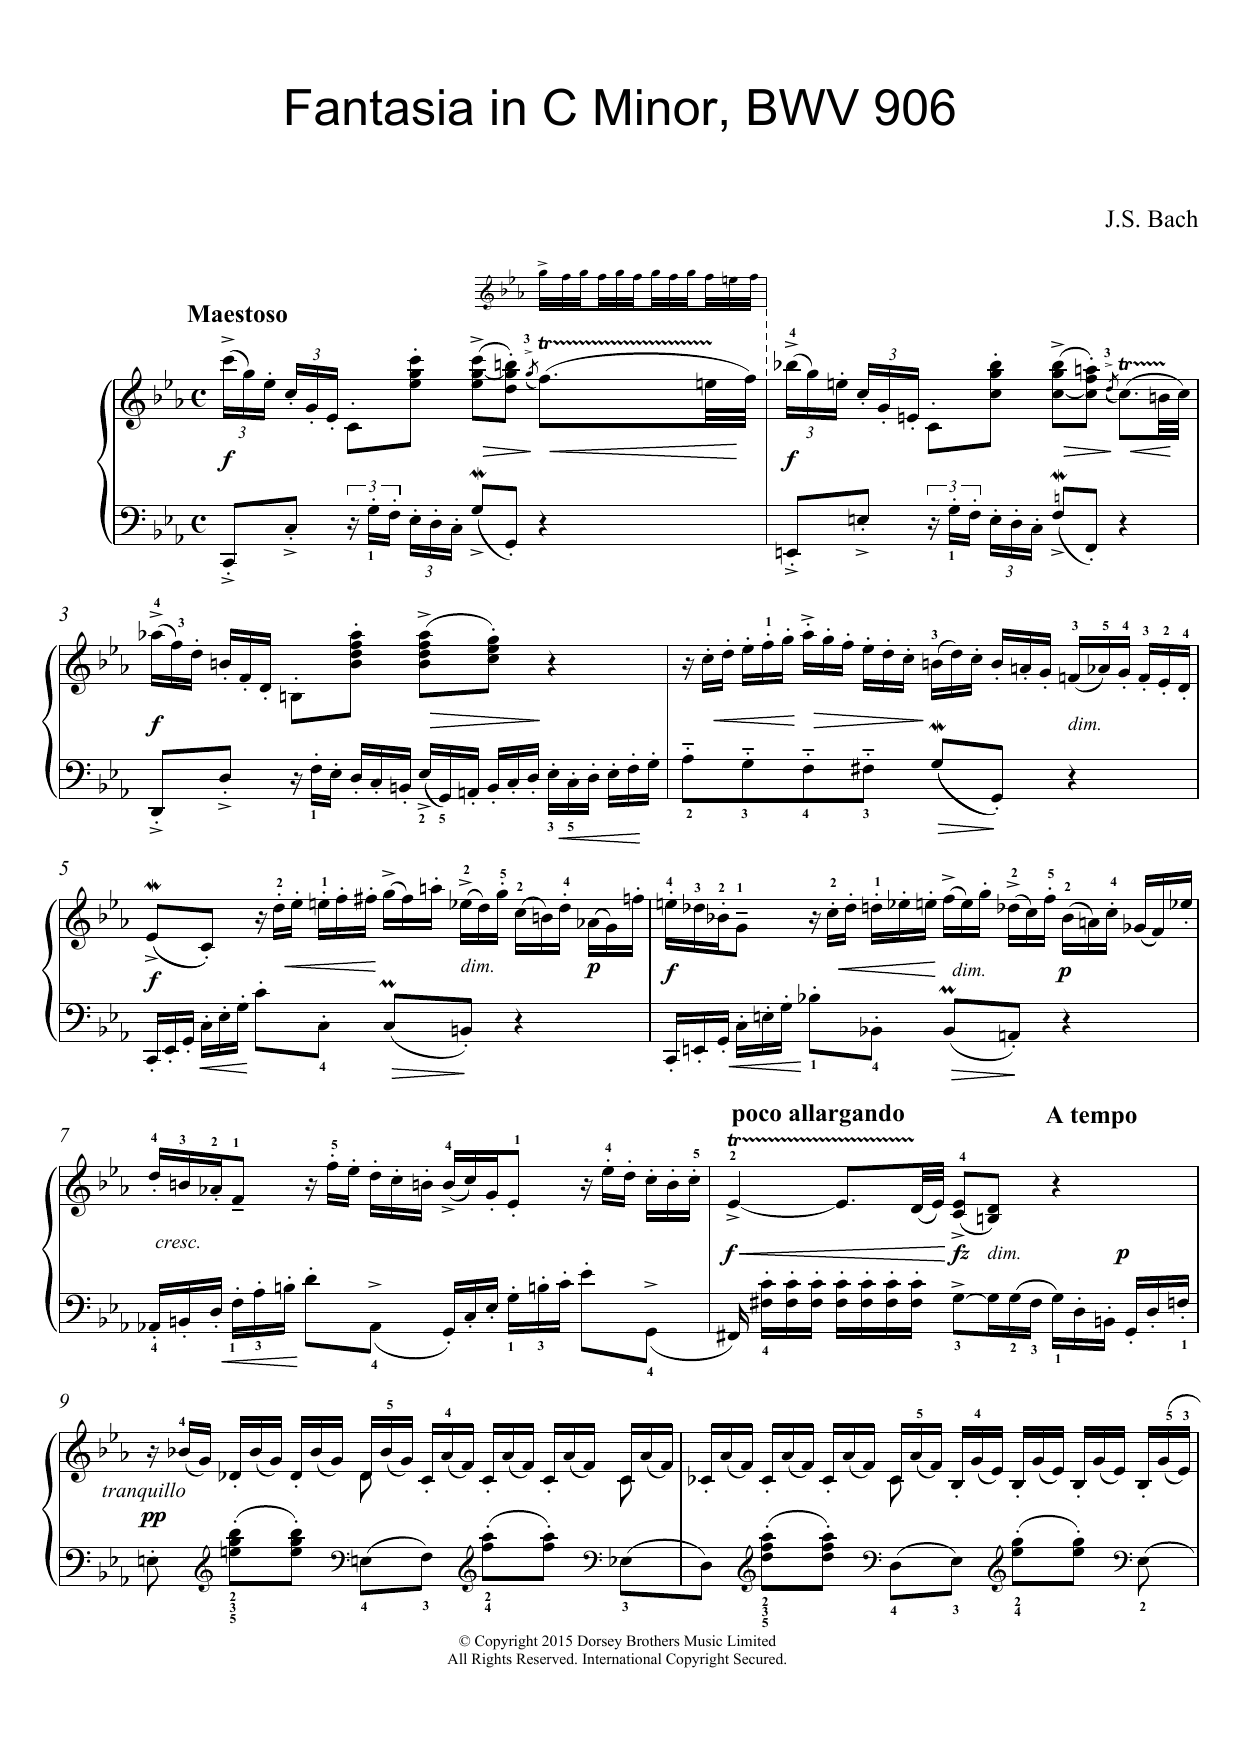 Johann Sebastian Bach Fantasia in C Minor, BWV 906 sheet music notes and chords arranged for Piano Solo